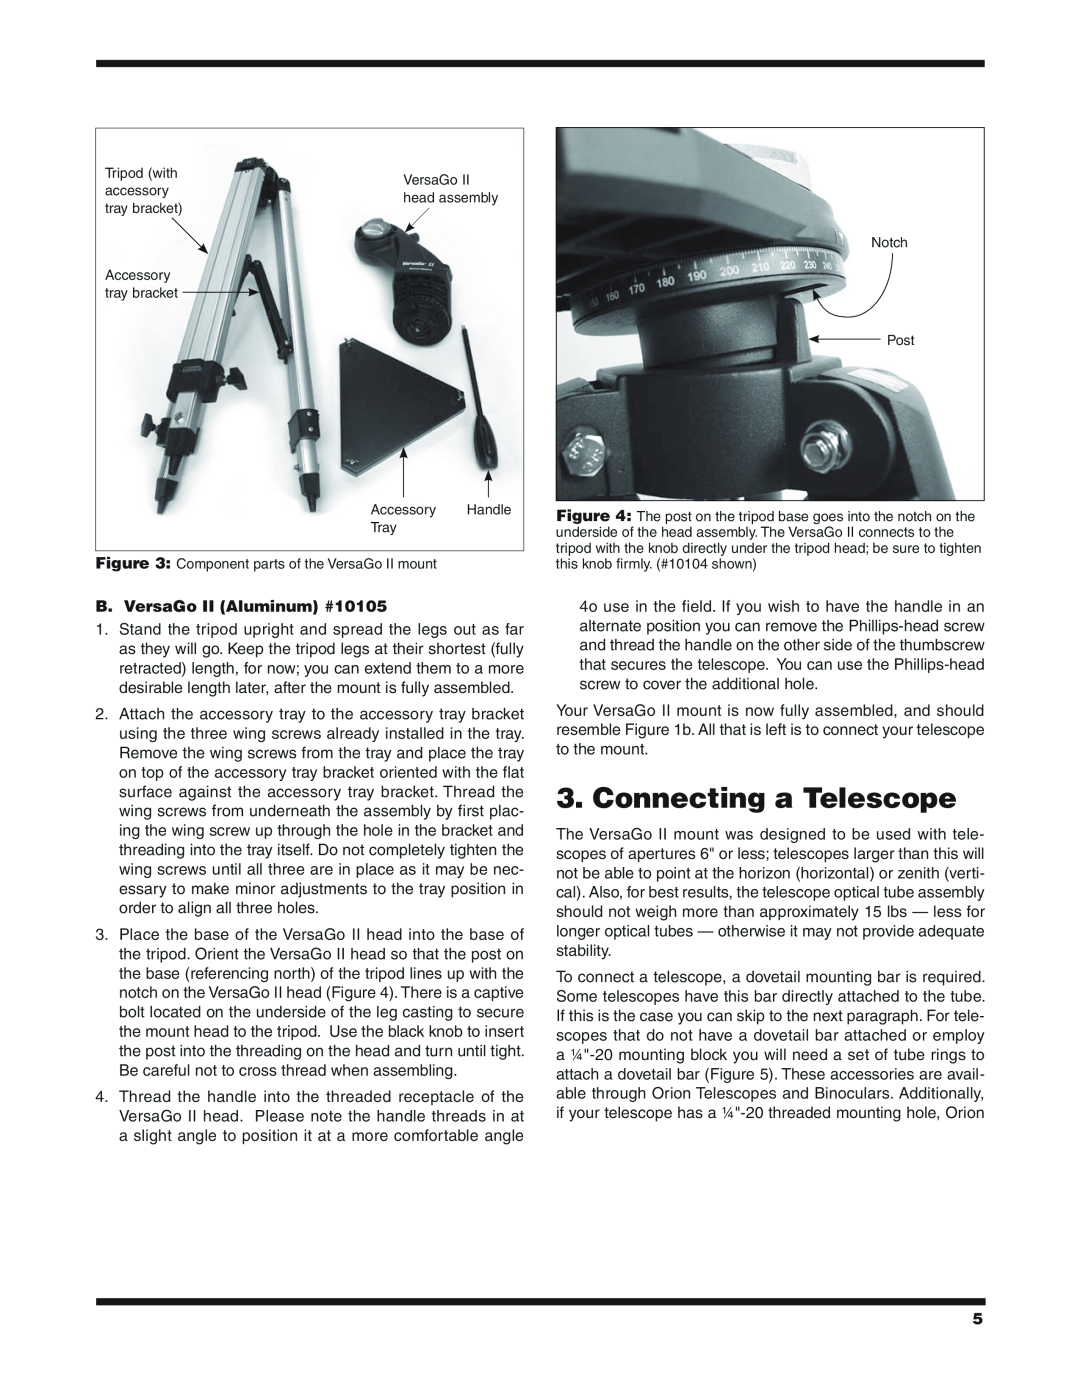 Orion #10104 instruction manual Connecting a Telescope, B. VersaGo II Aluminum #10105 